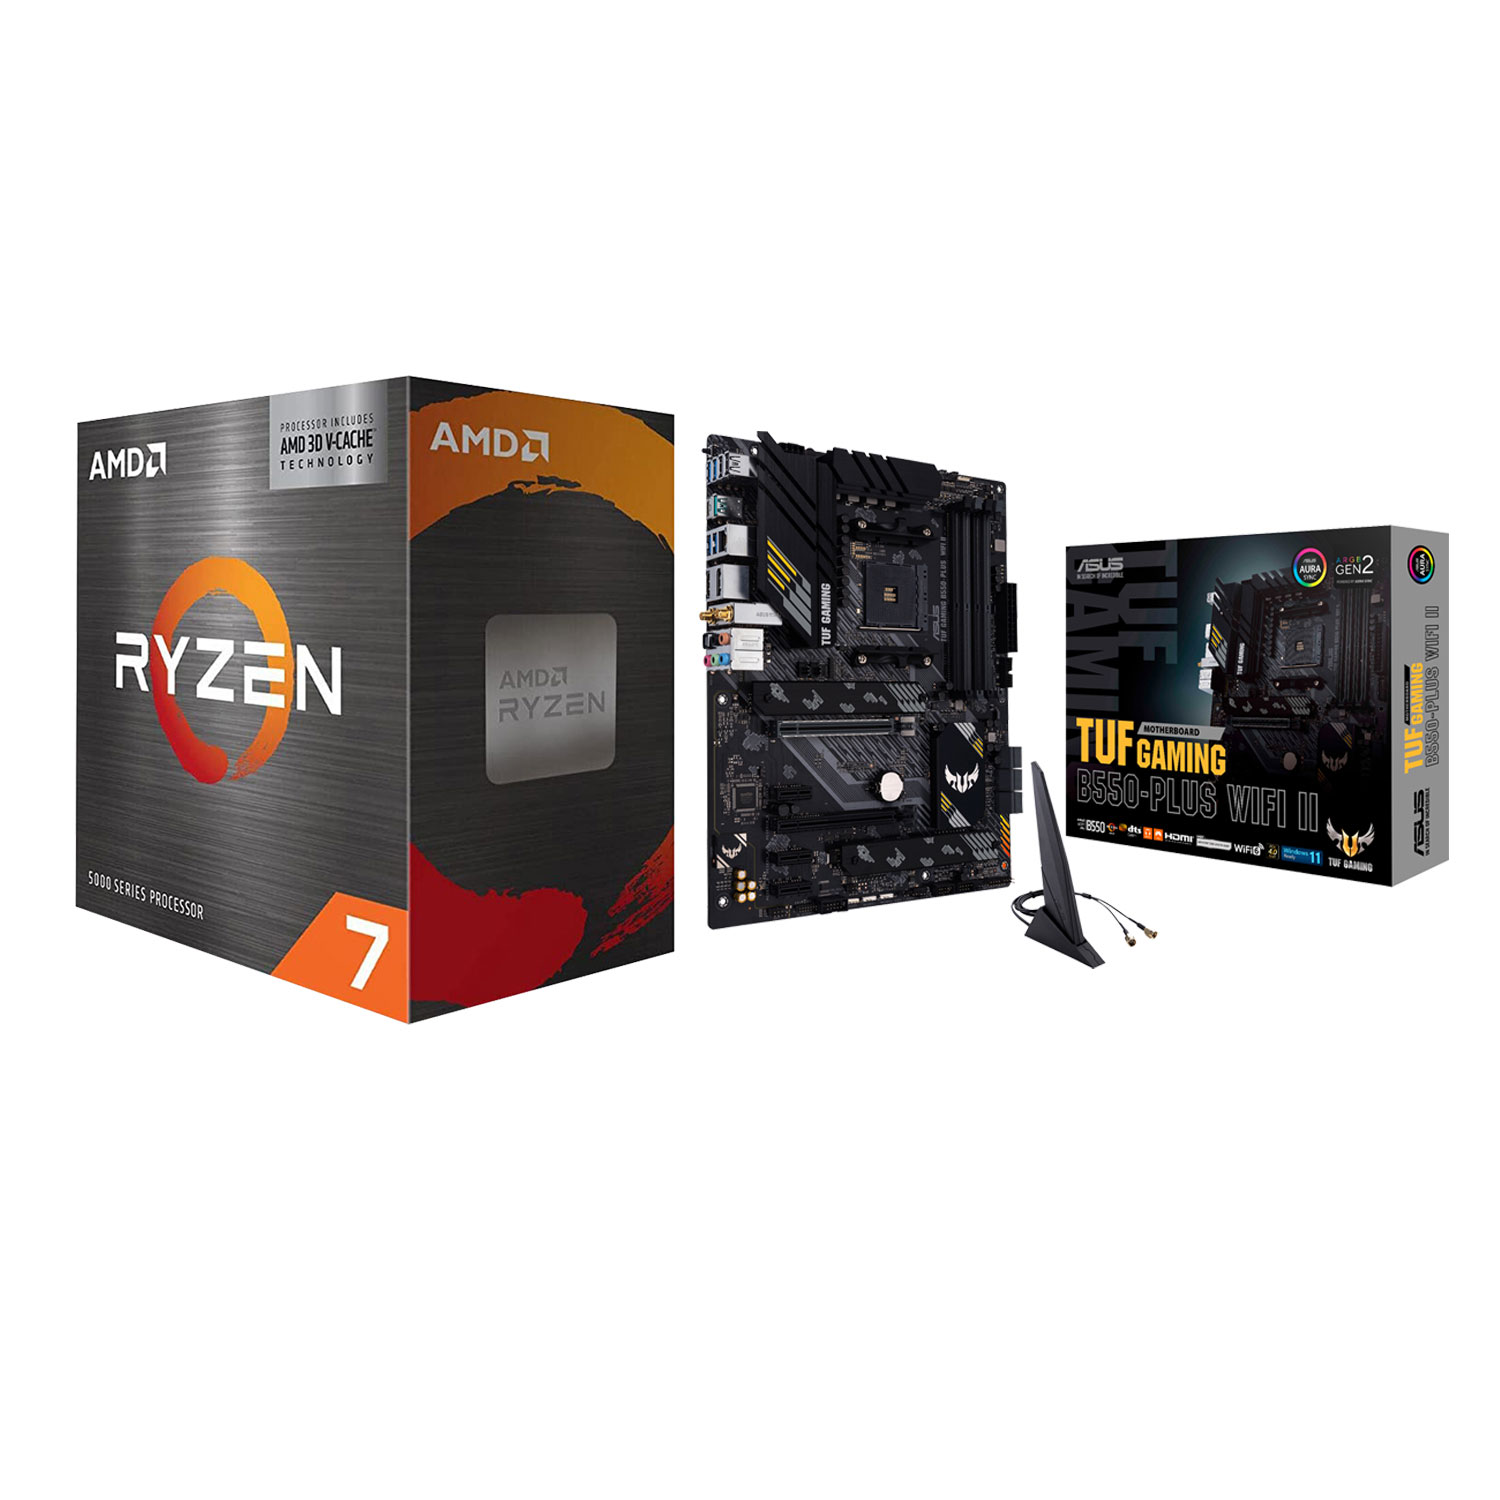 AMD Ryzen 7 5700X3D 6-Core 3GHz AM4 Processor & ASUS AM4 DDR4 Motherboard for AMD Ryzen 3000/5000 Series CPUs